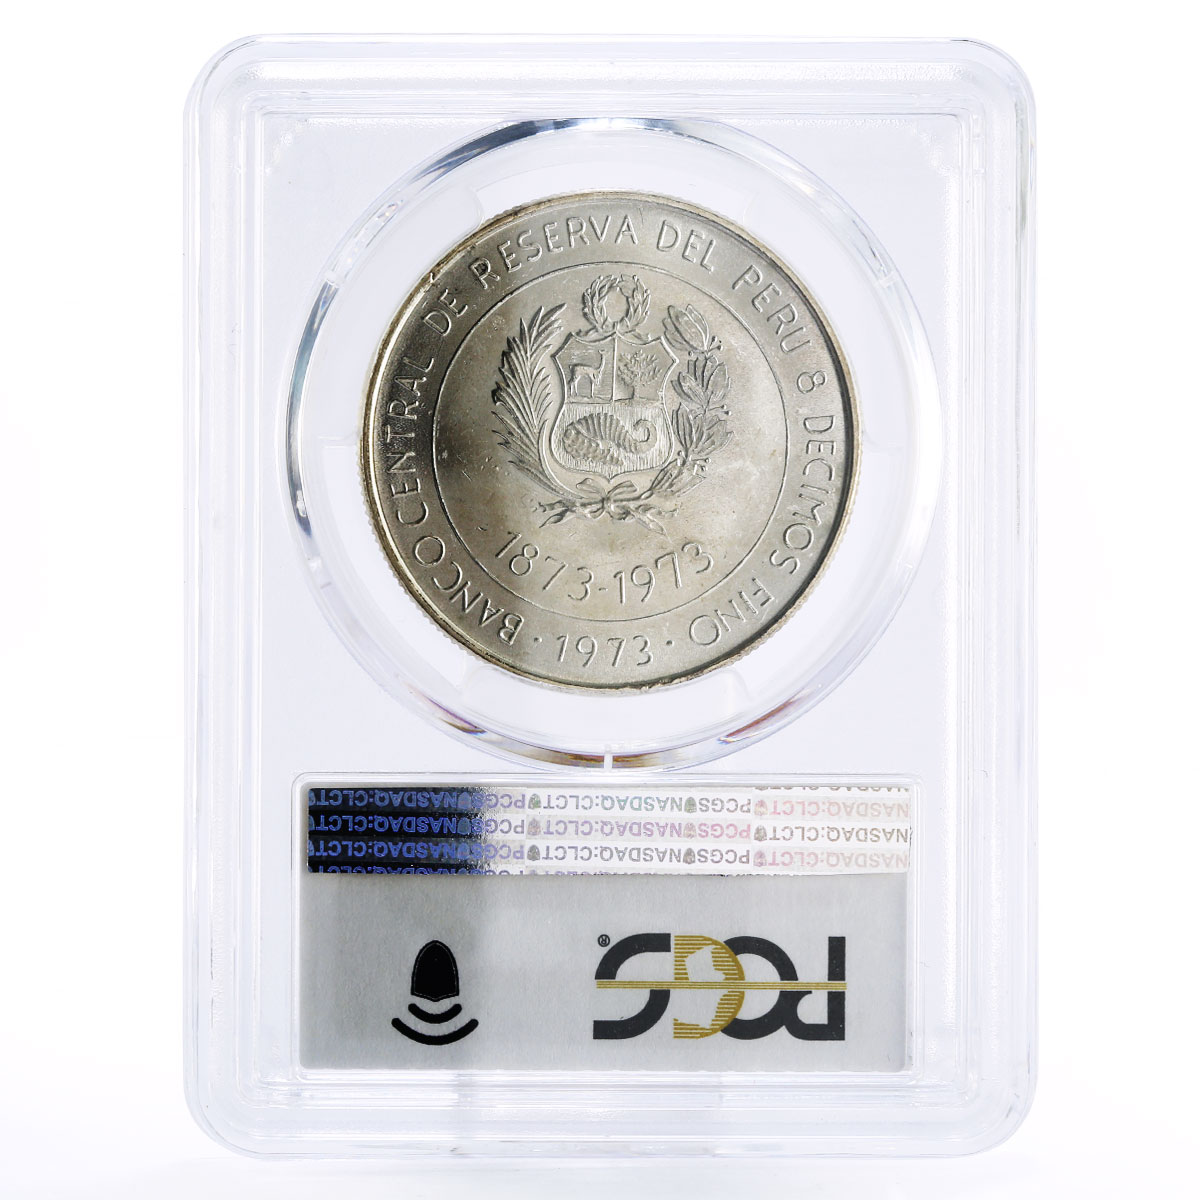 Peru 100 sol Economics Peru - Japan Trade Relations MS67 PCGS silver coin 1973